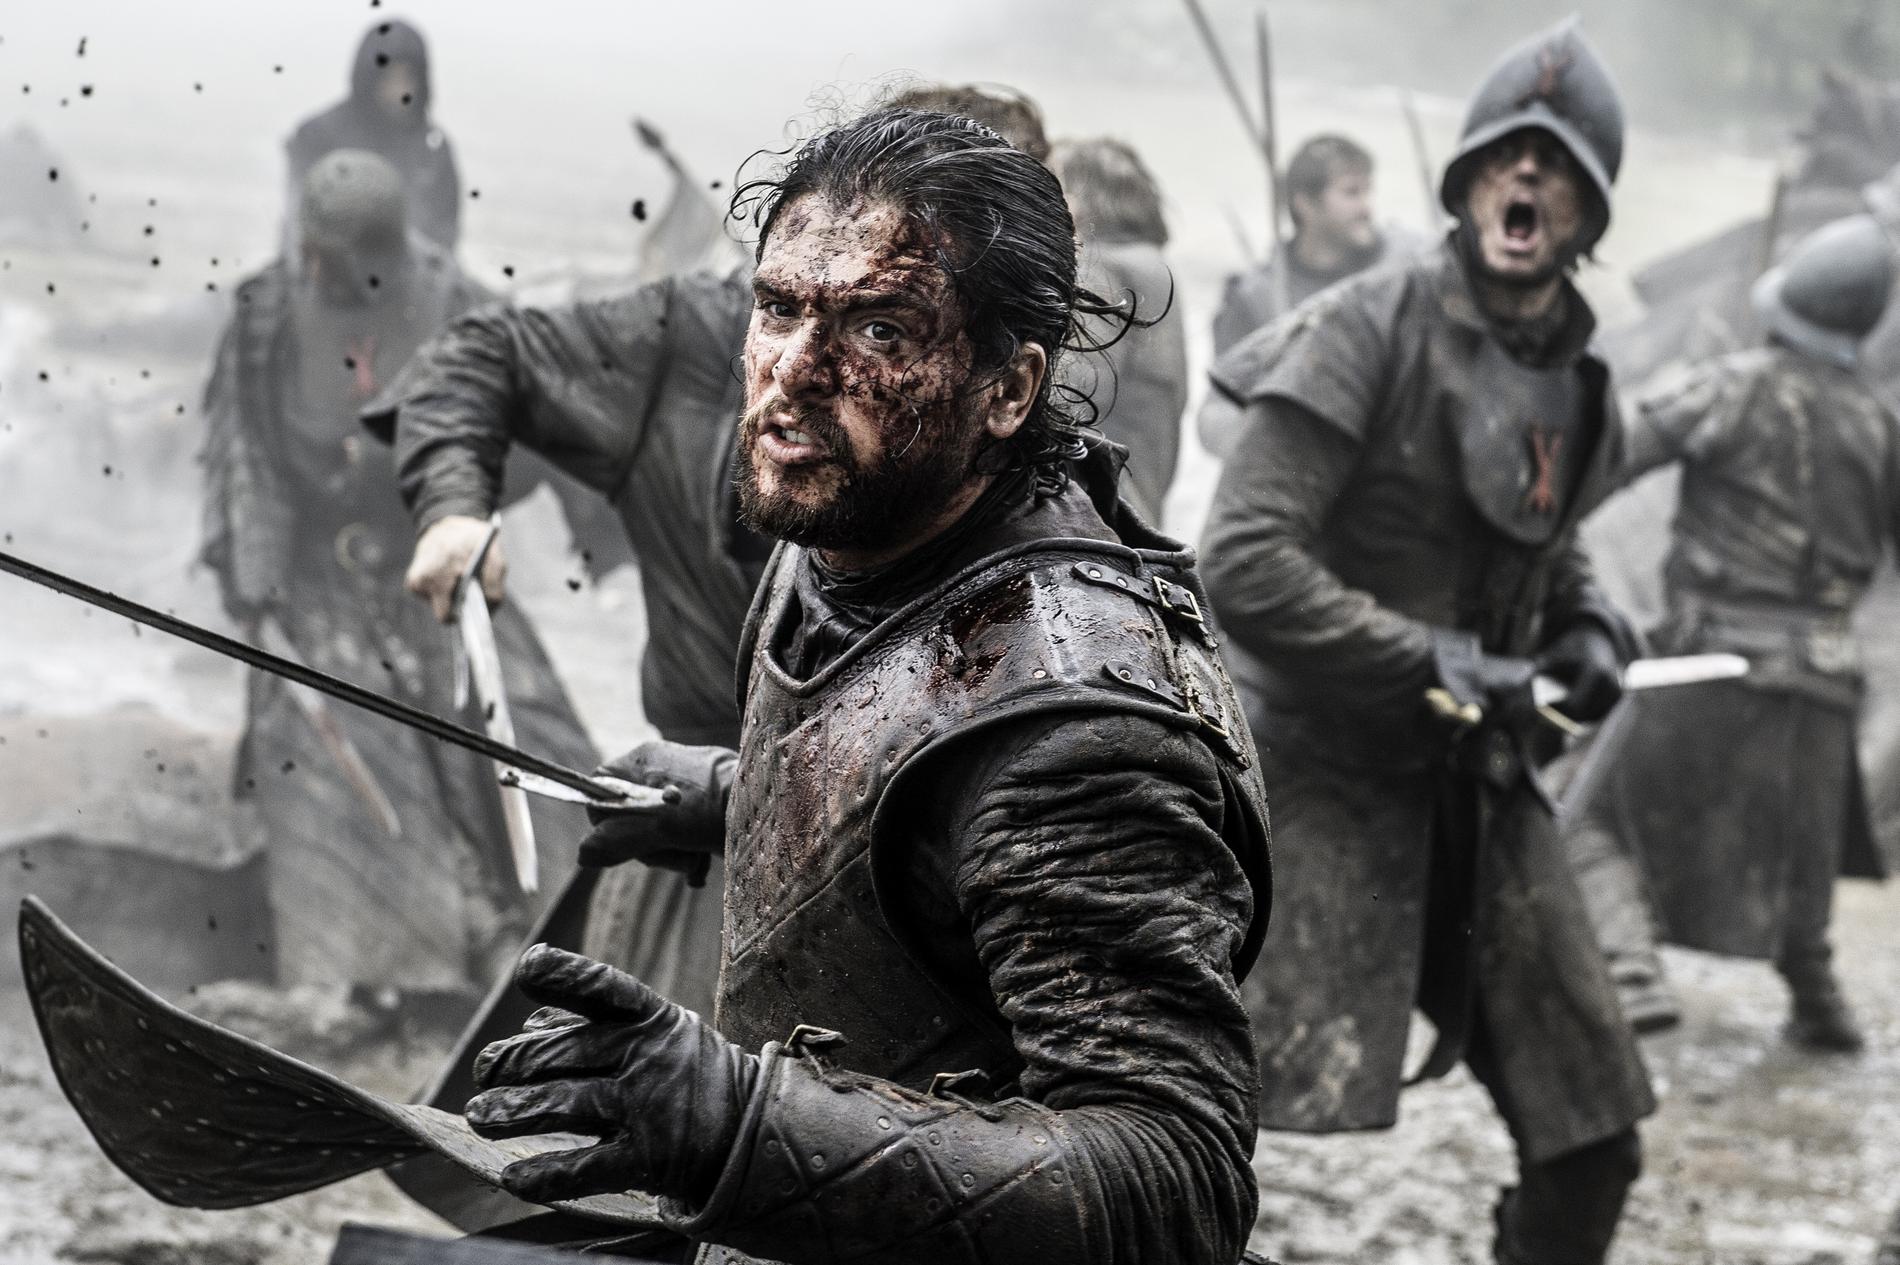 Kit Harington som Jon Snow i ”Game of thrones”.